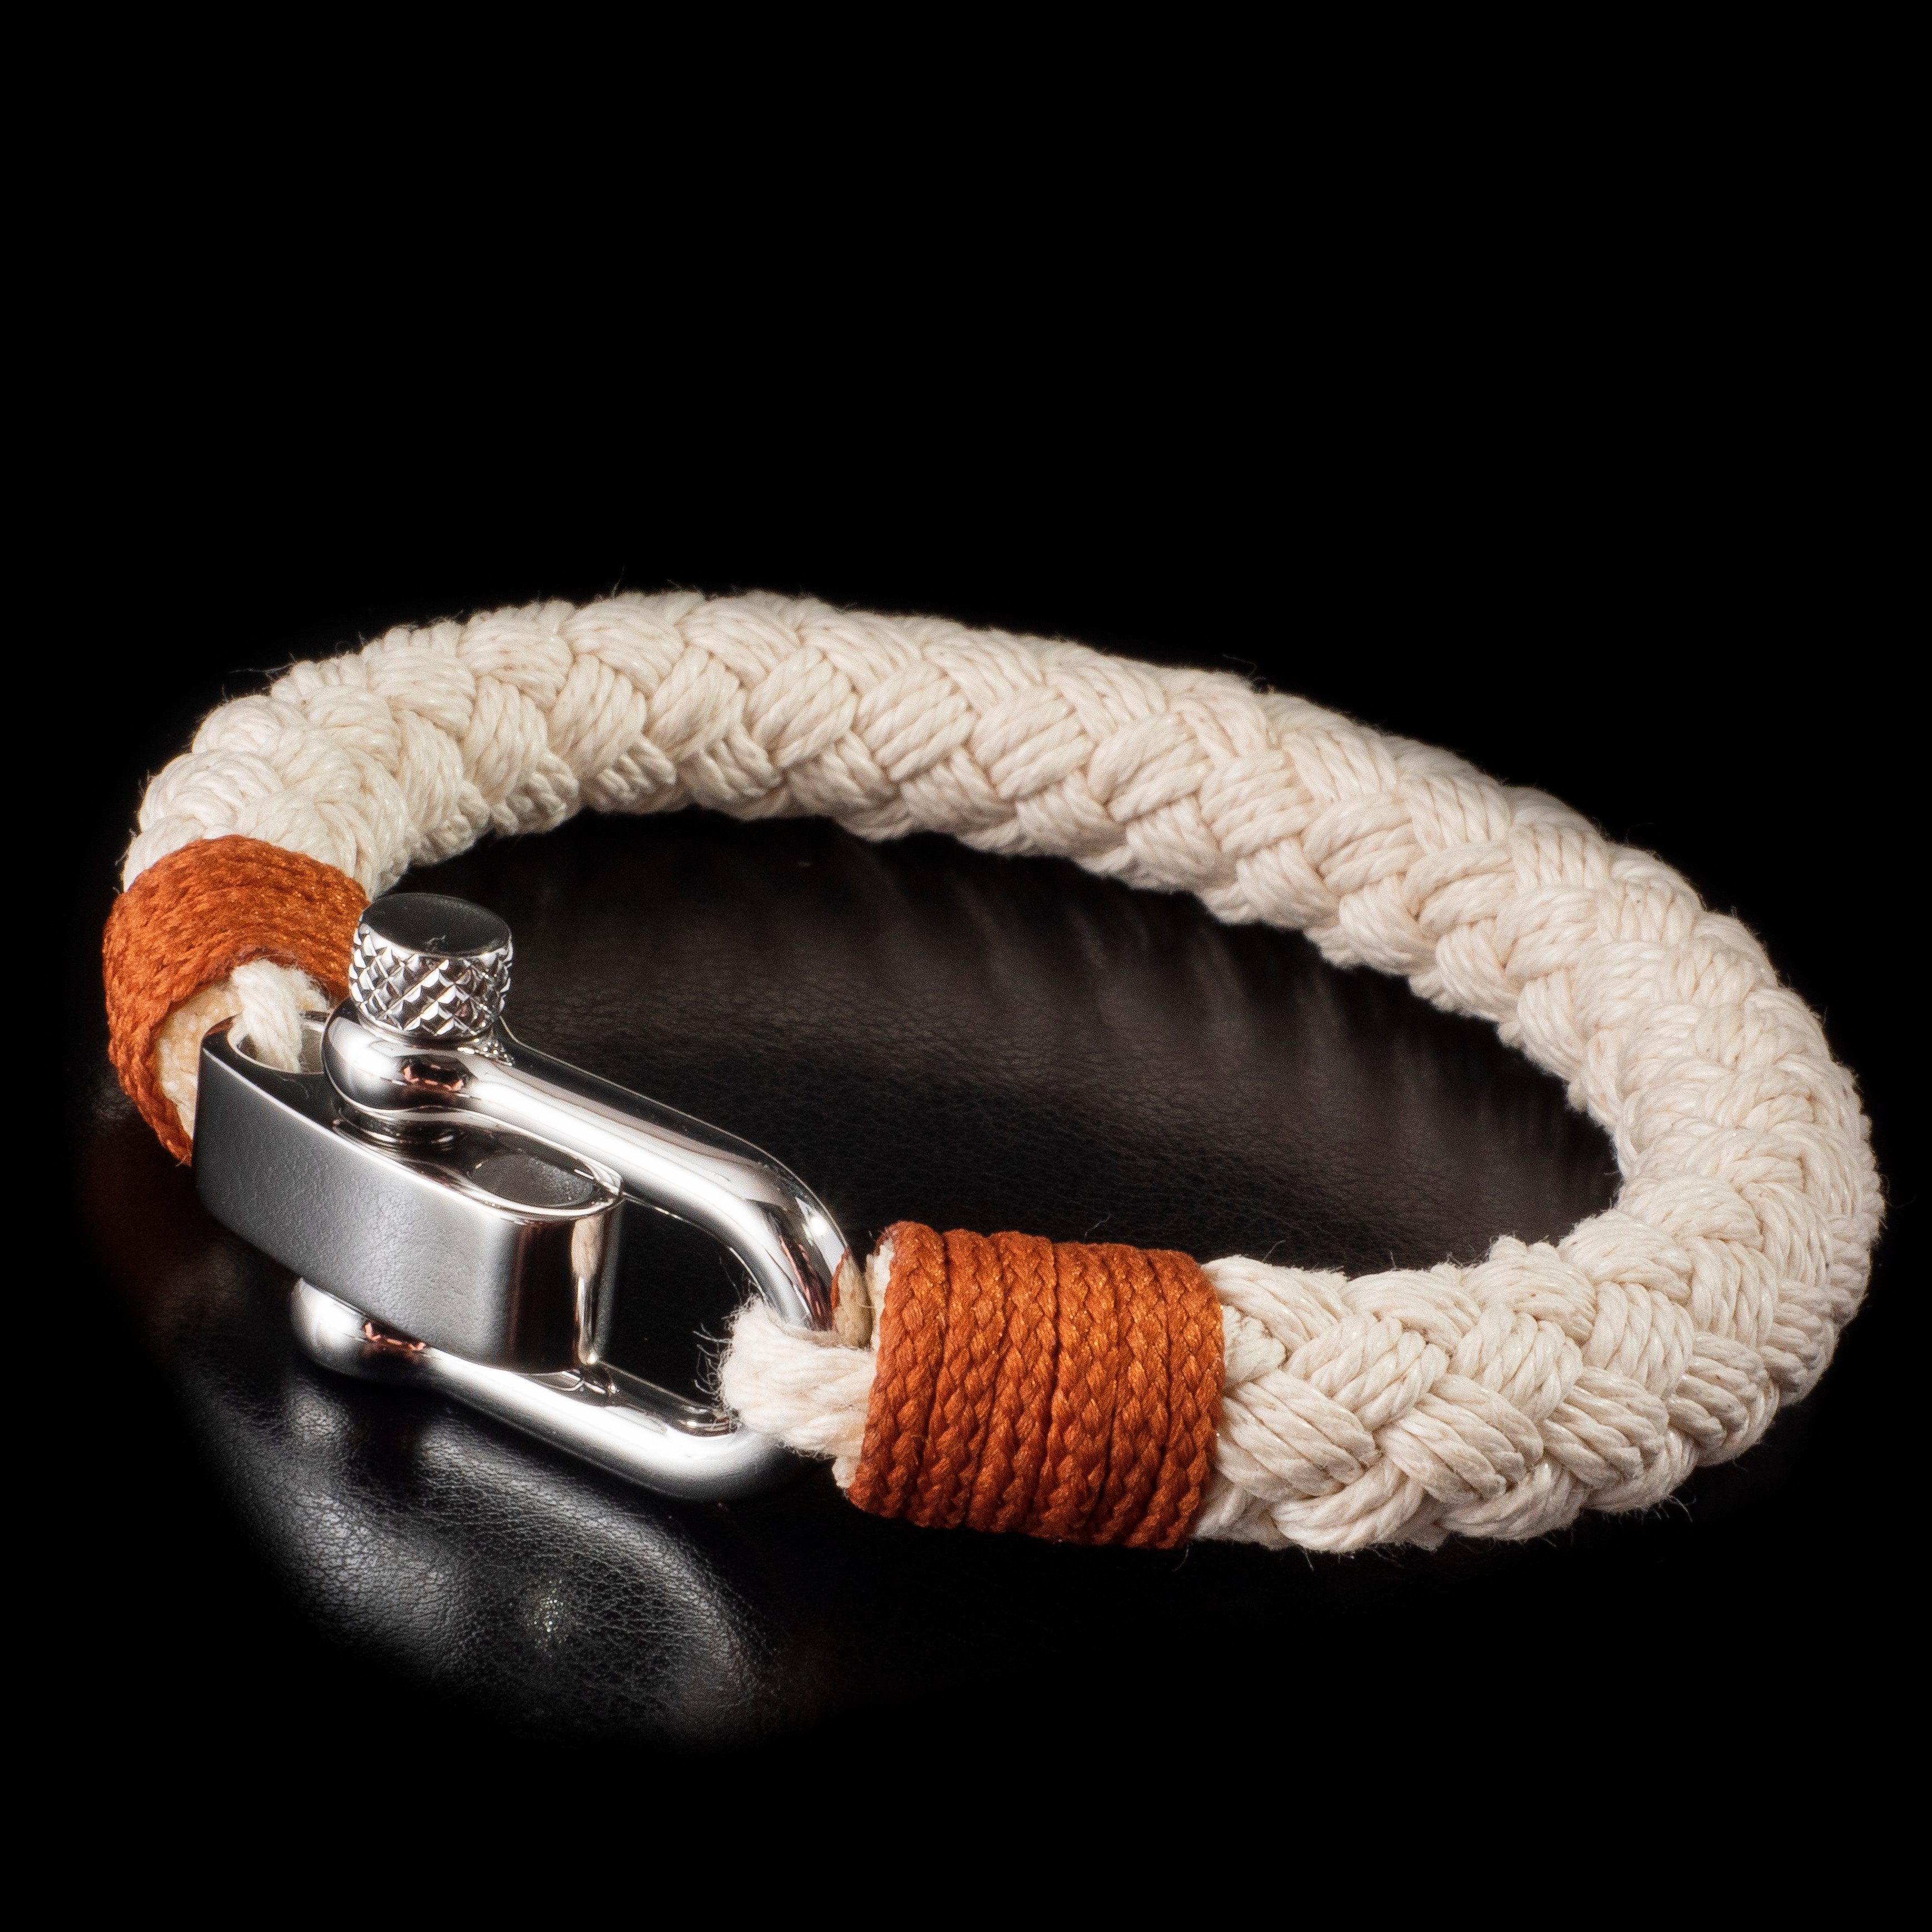 UNIQAL.de Armband Maritime verschluss Schäckel (Edelstahl, Armband Casual "RONA" Style, nautics, aus Segeltau Segeltau, handgefertigt)